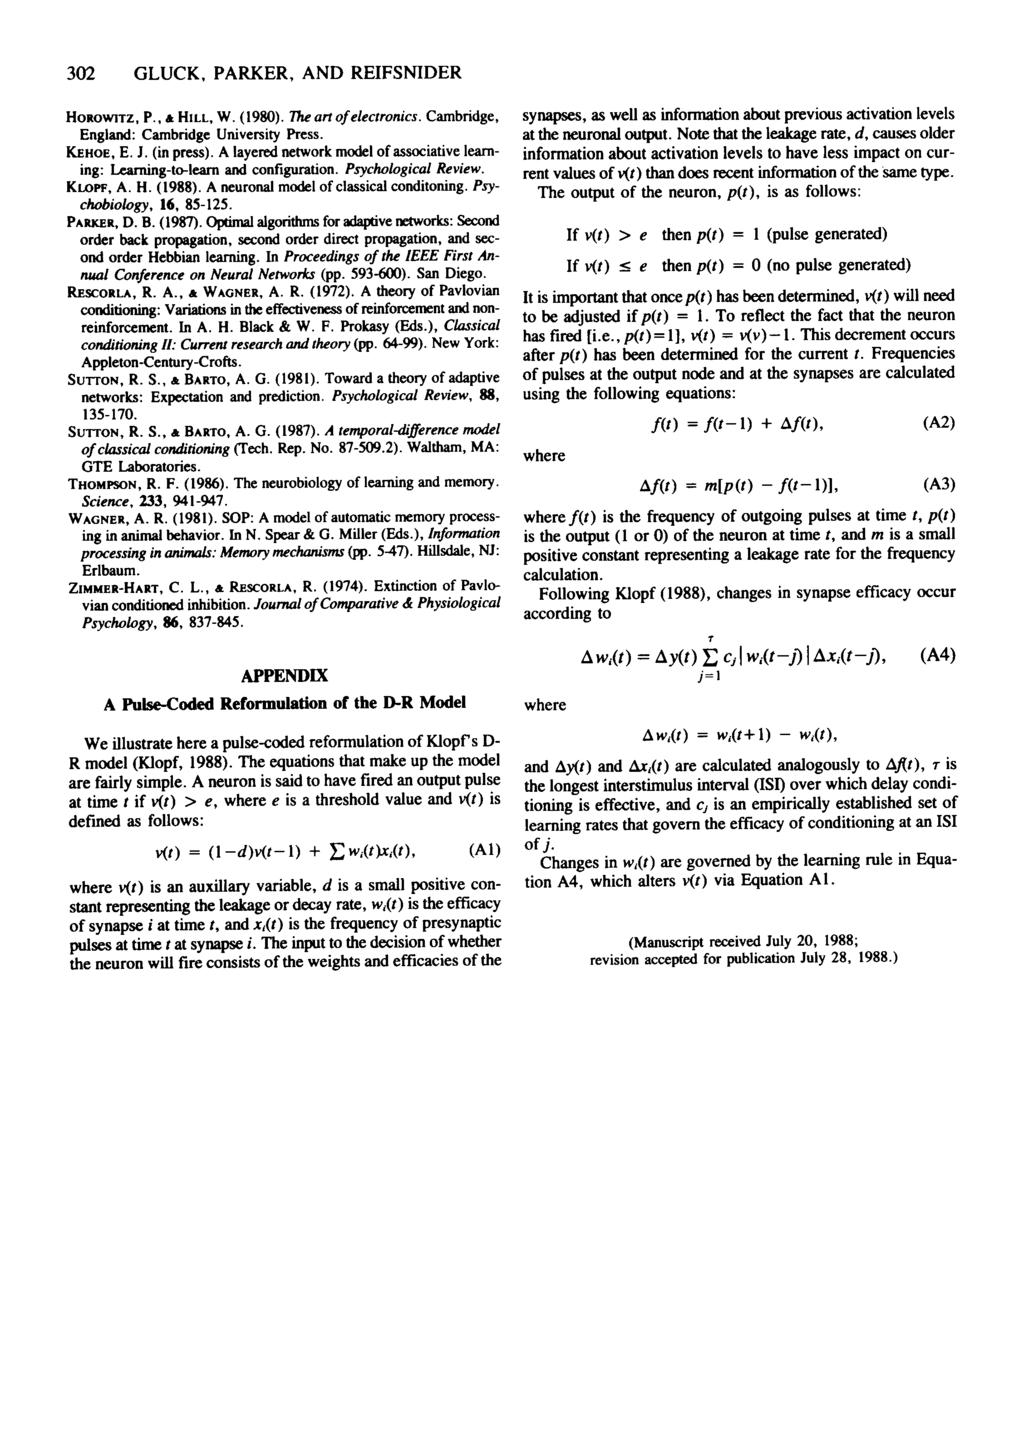 302 GLUCK, PARKER, AND REIFSNIDER HOROWlTZ, P., A HILL, W. (1980). 1he an ofelectronics. Cambridge, England: Cambridge University Press. KEHOE, E. J. (in press).